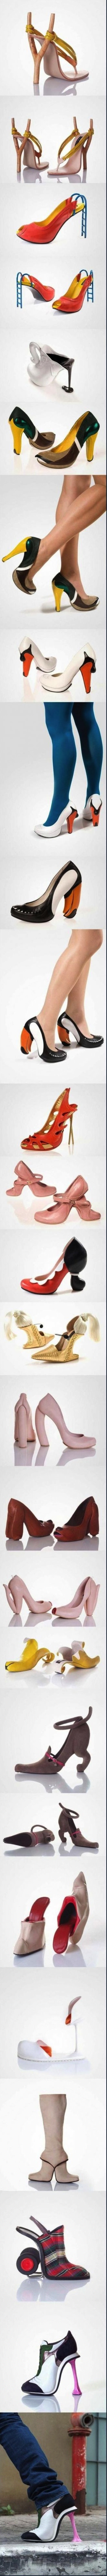 Just some creative heels